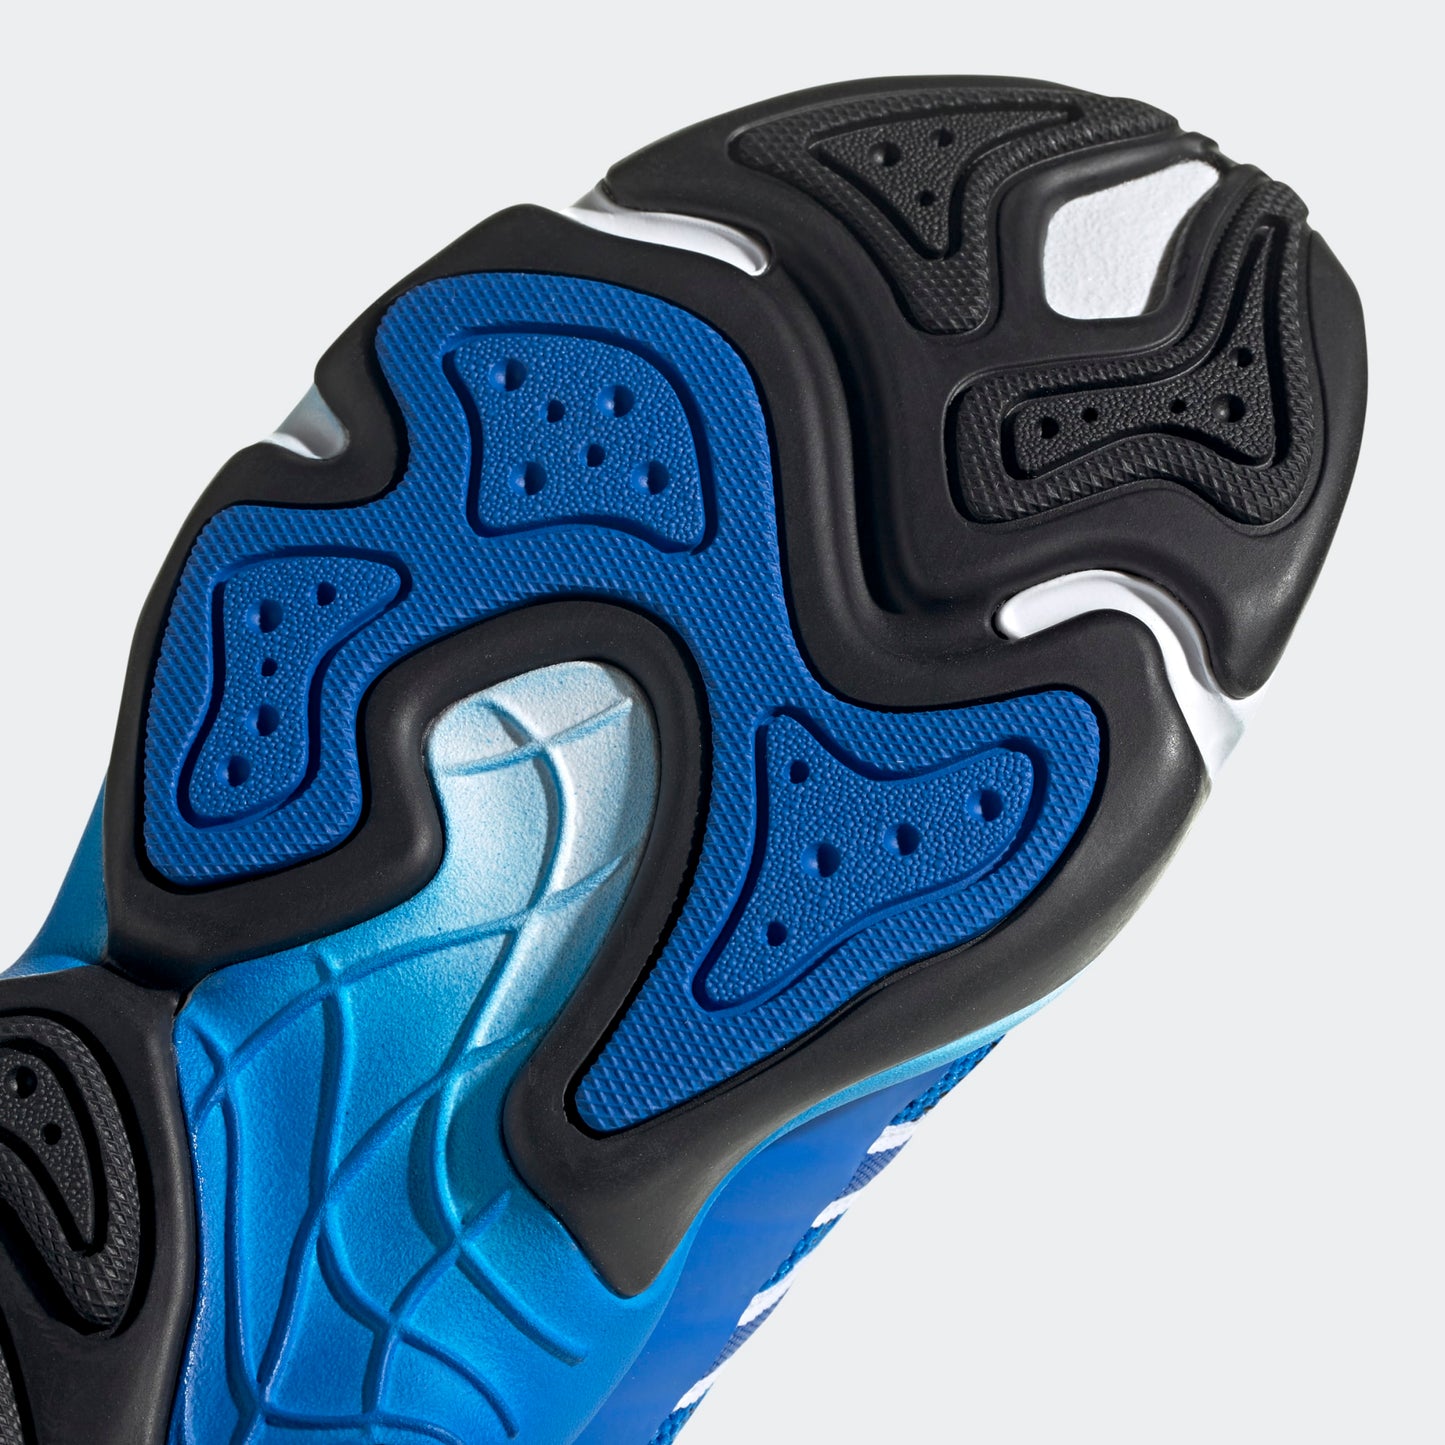 Scarpe Adidas Originals HAIWEE SHOES -EF5789-